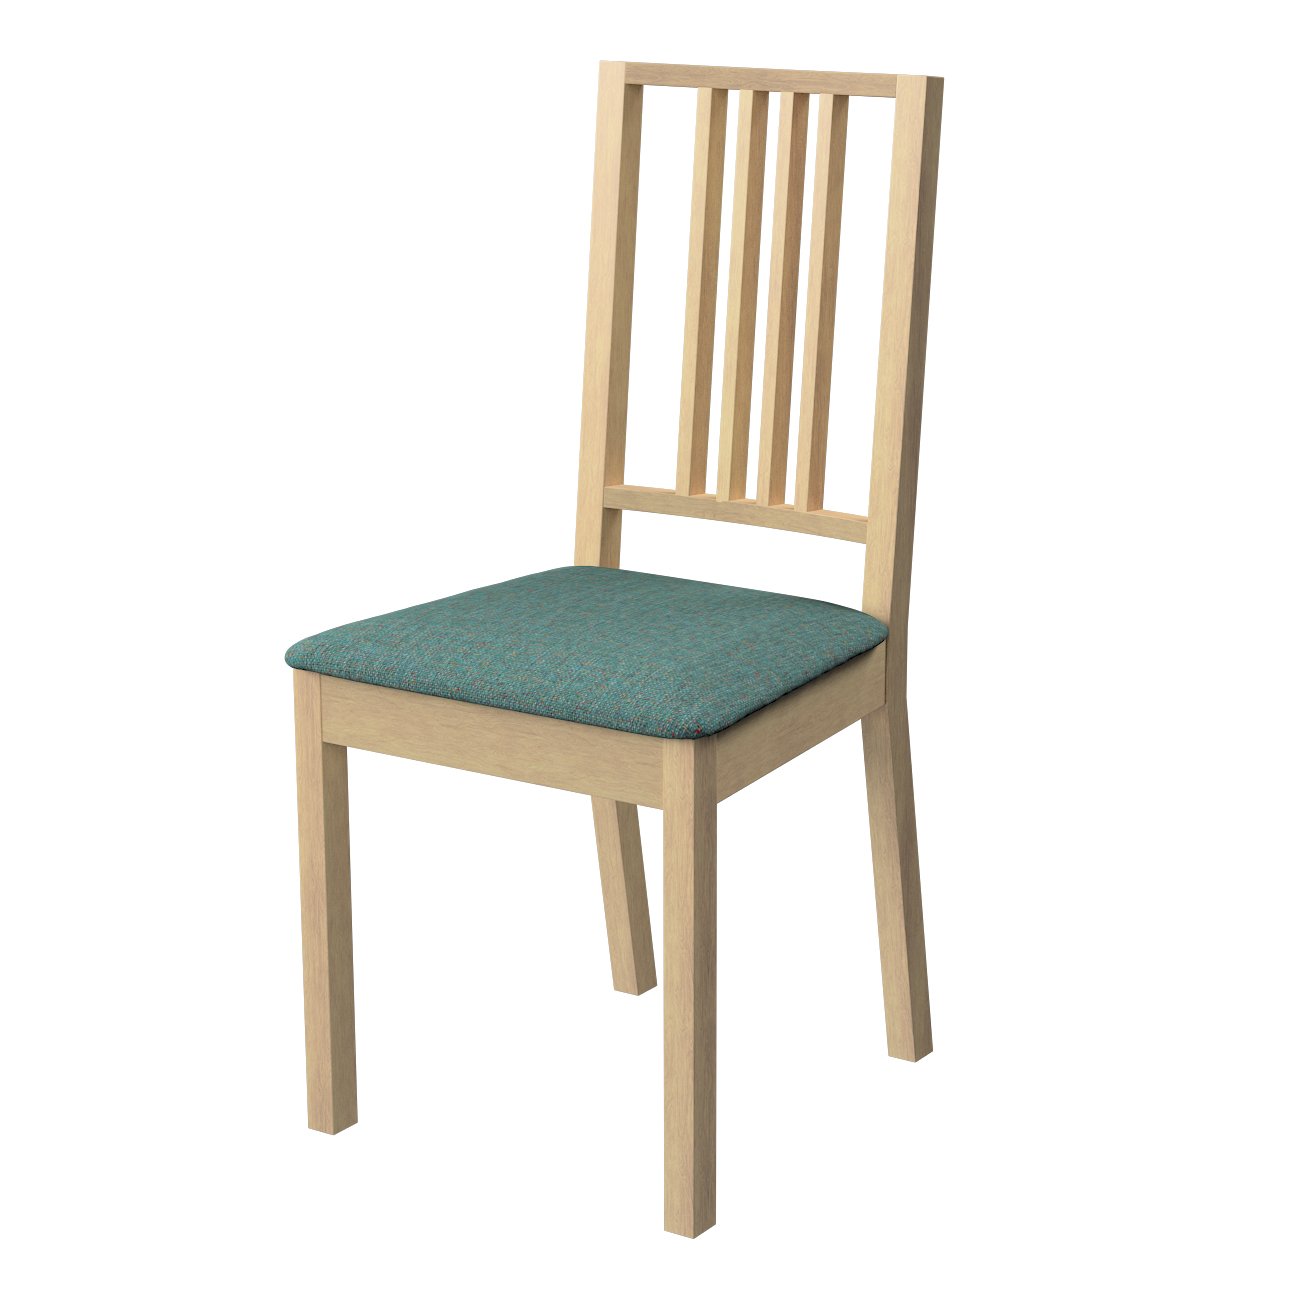 Dekoria Potah na sedák židle Börje, tyrkysová melanž, potah sedák židle Börje, Madrid, 162-33